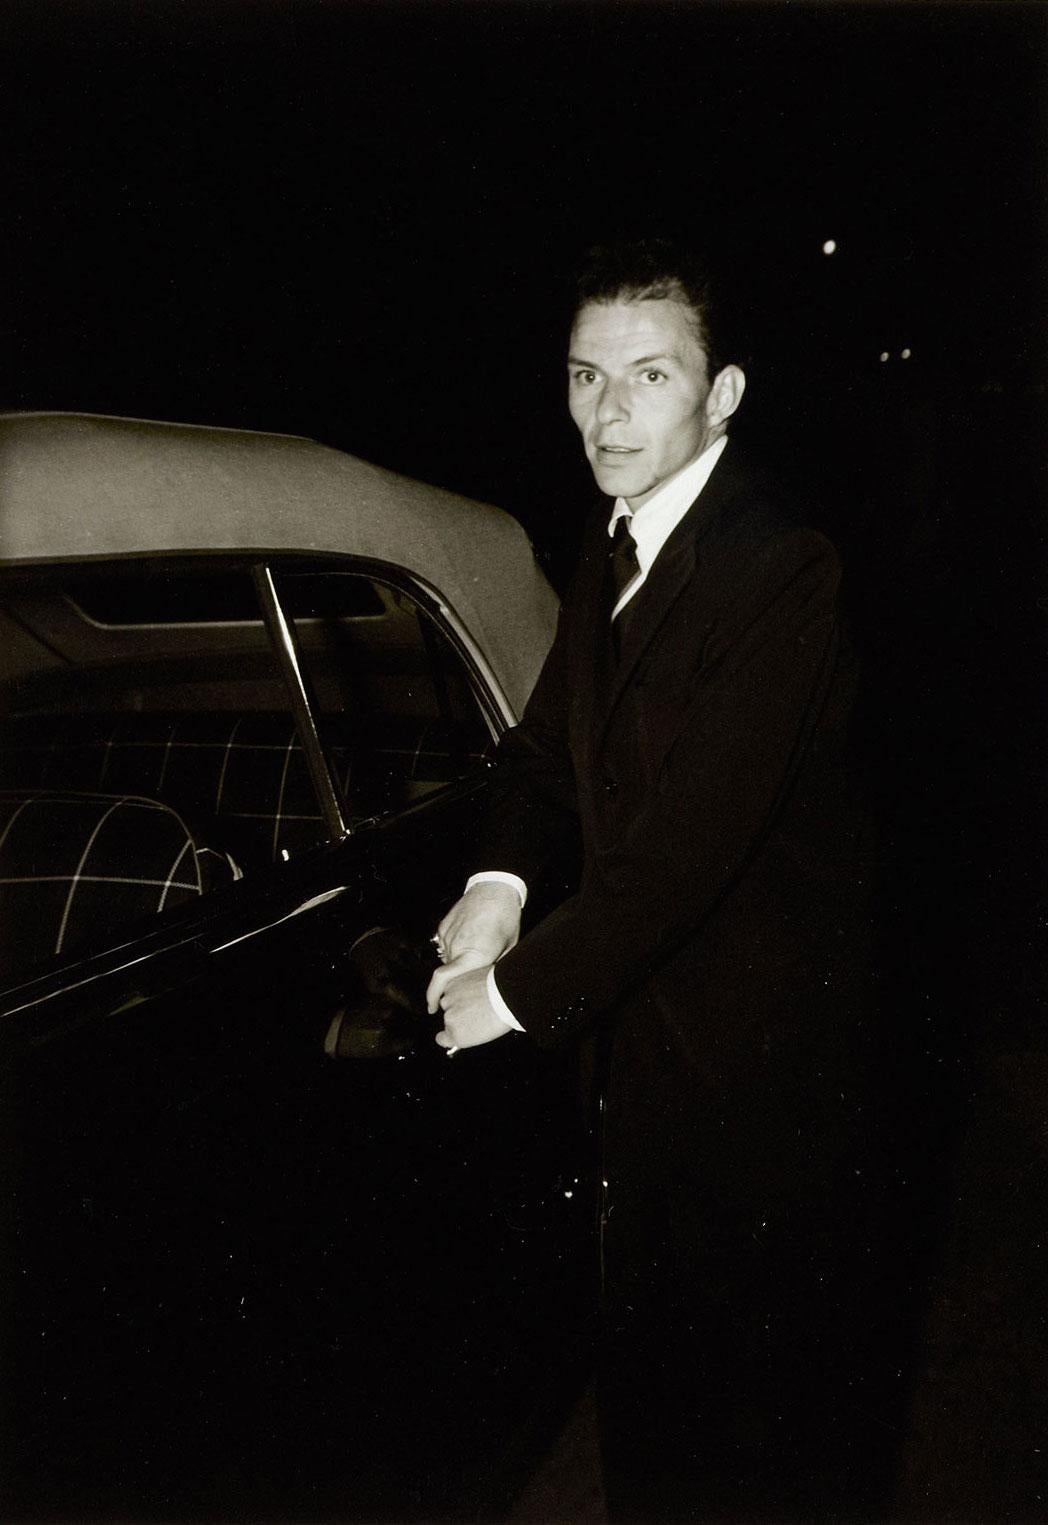 Unknown Black and White Photograph – Frank Sinatra geht nach Hause – Nachlass gestempelt